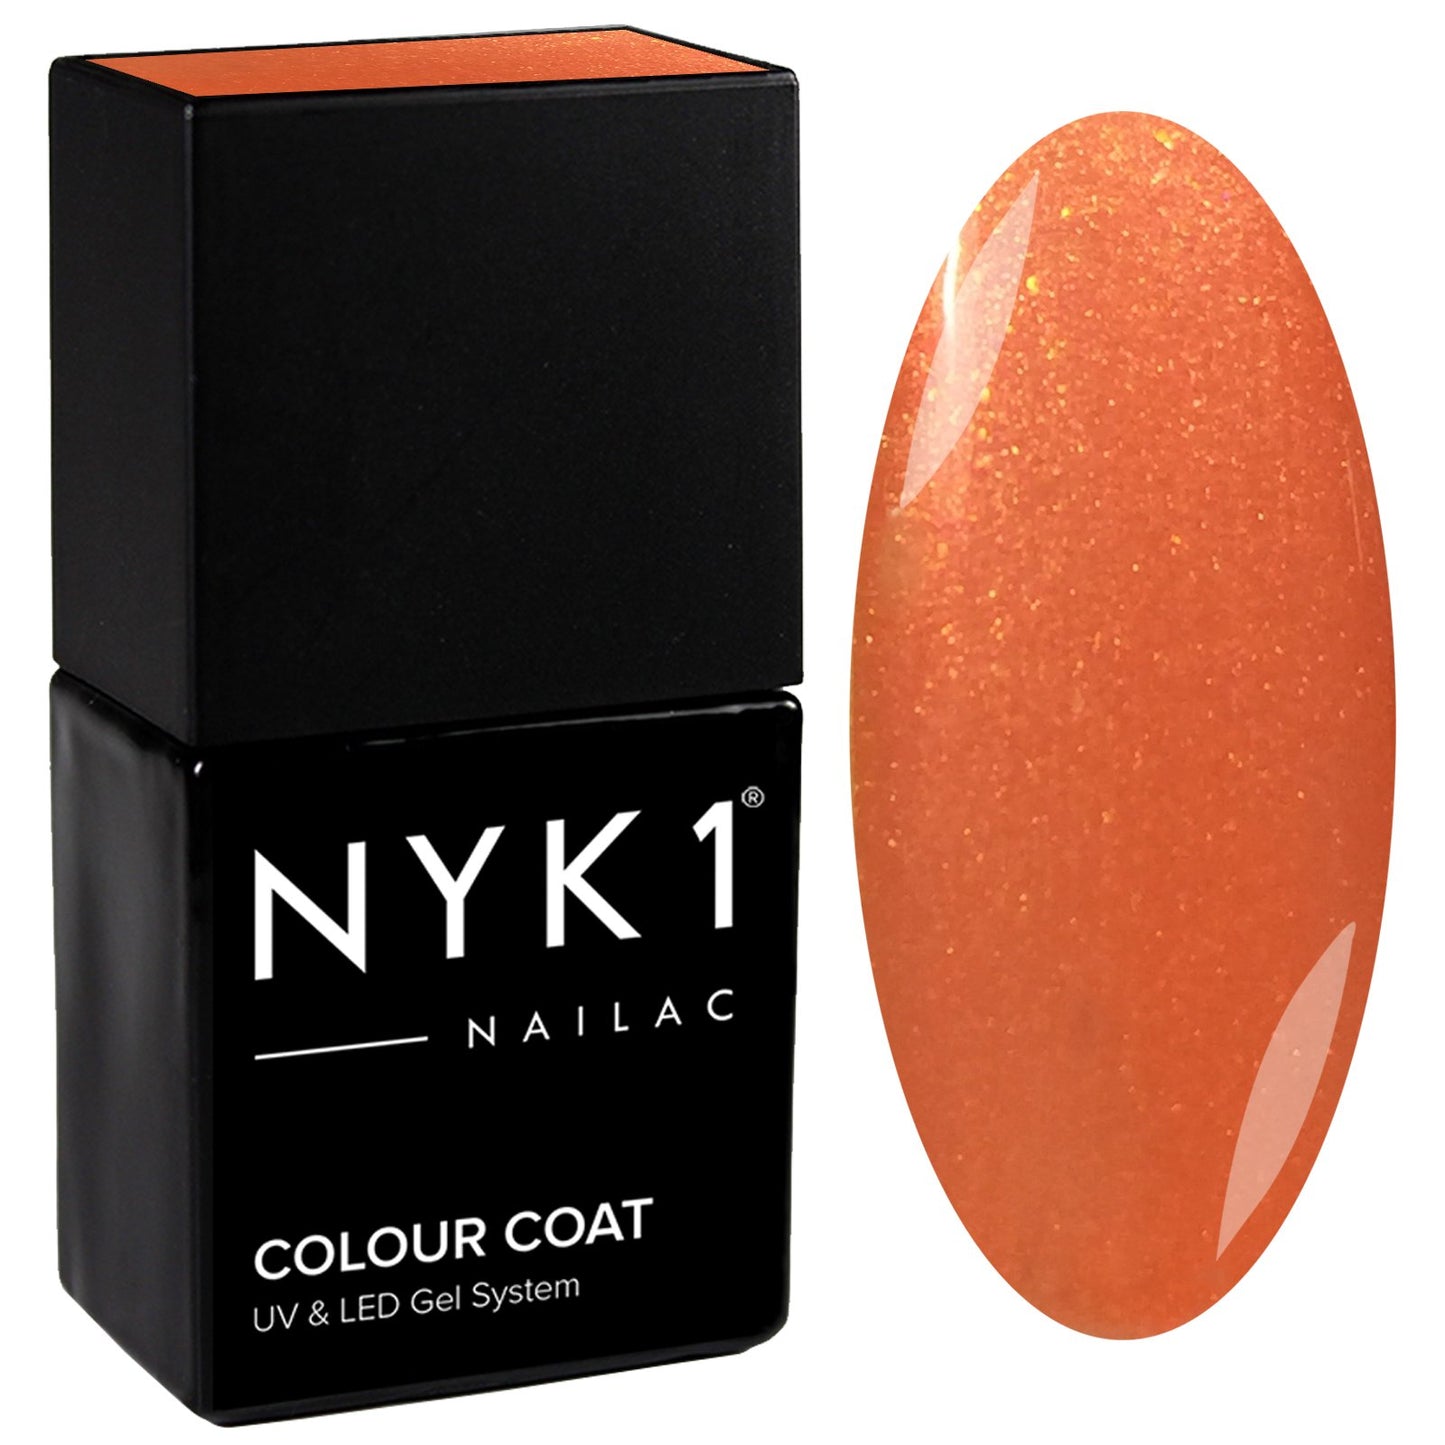 NYK1 Glitter Sparkle Orange Gel Nail Polish